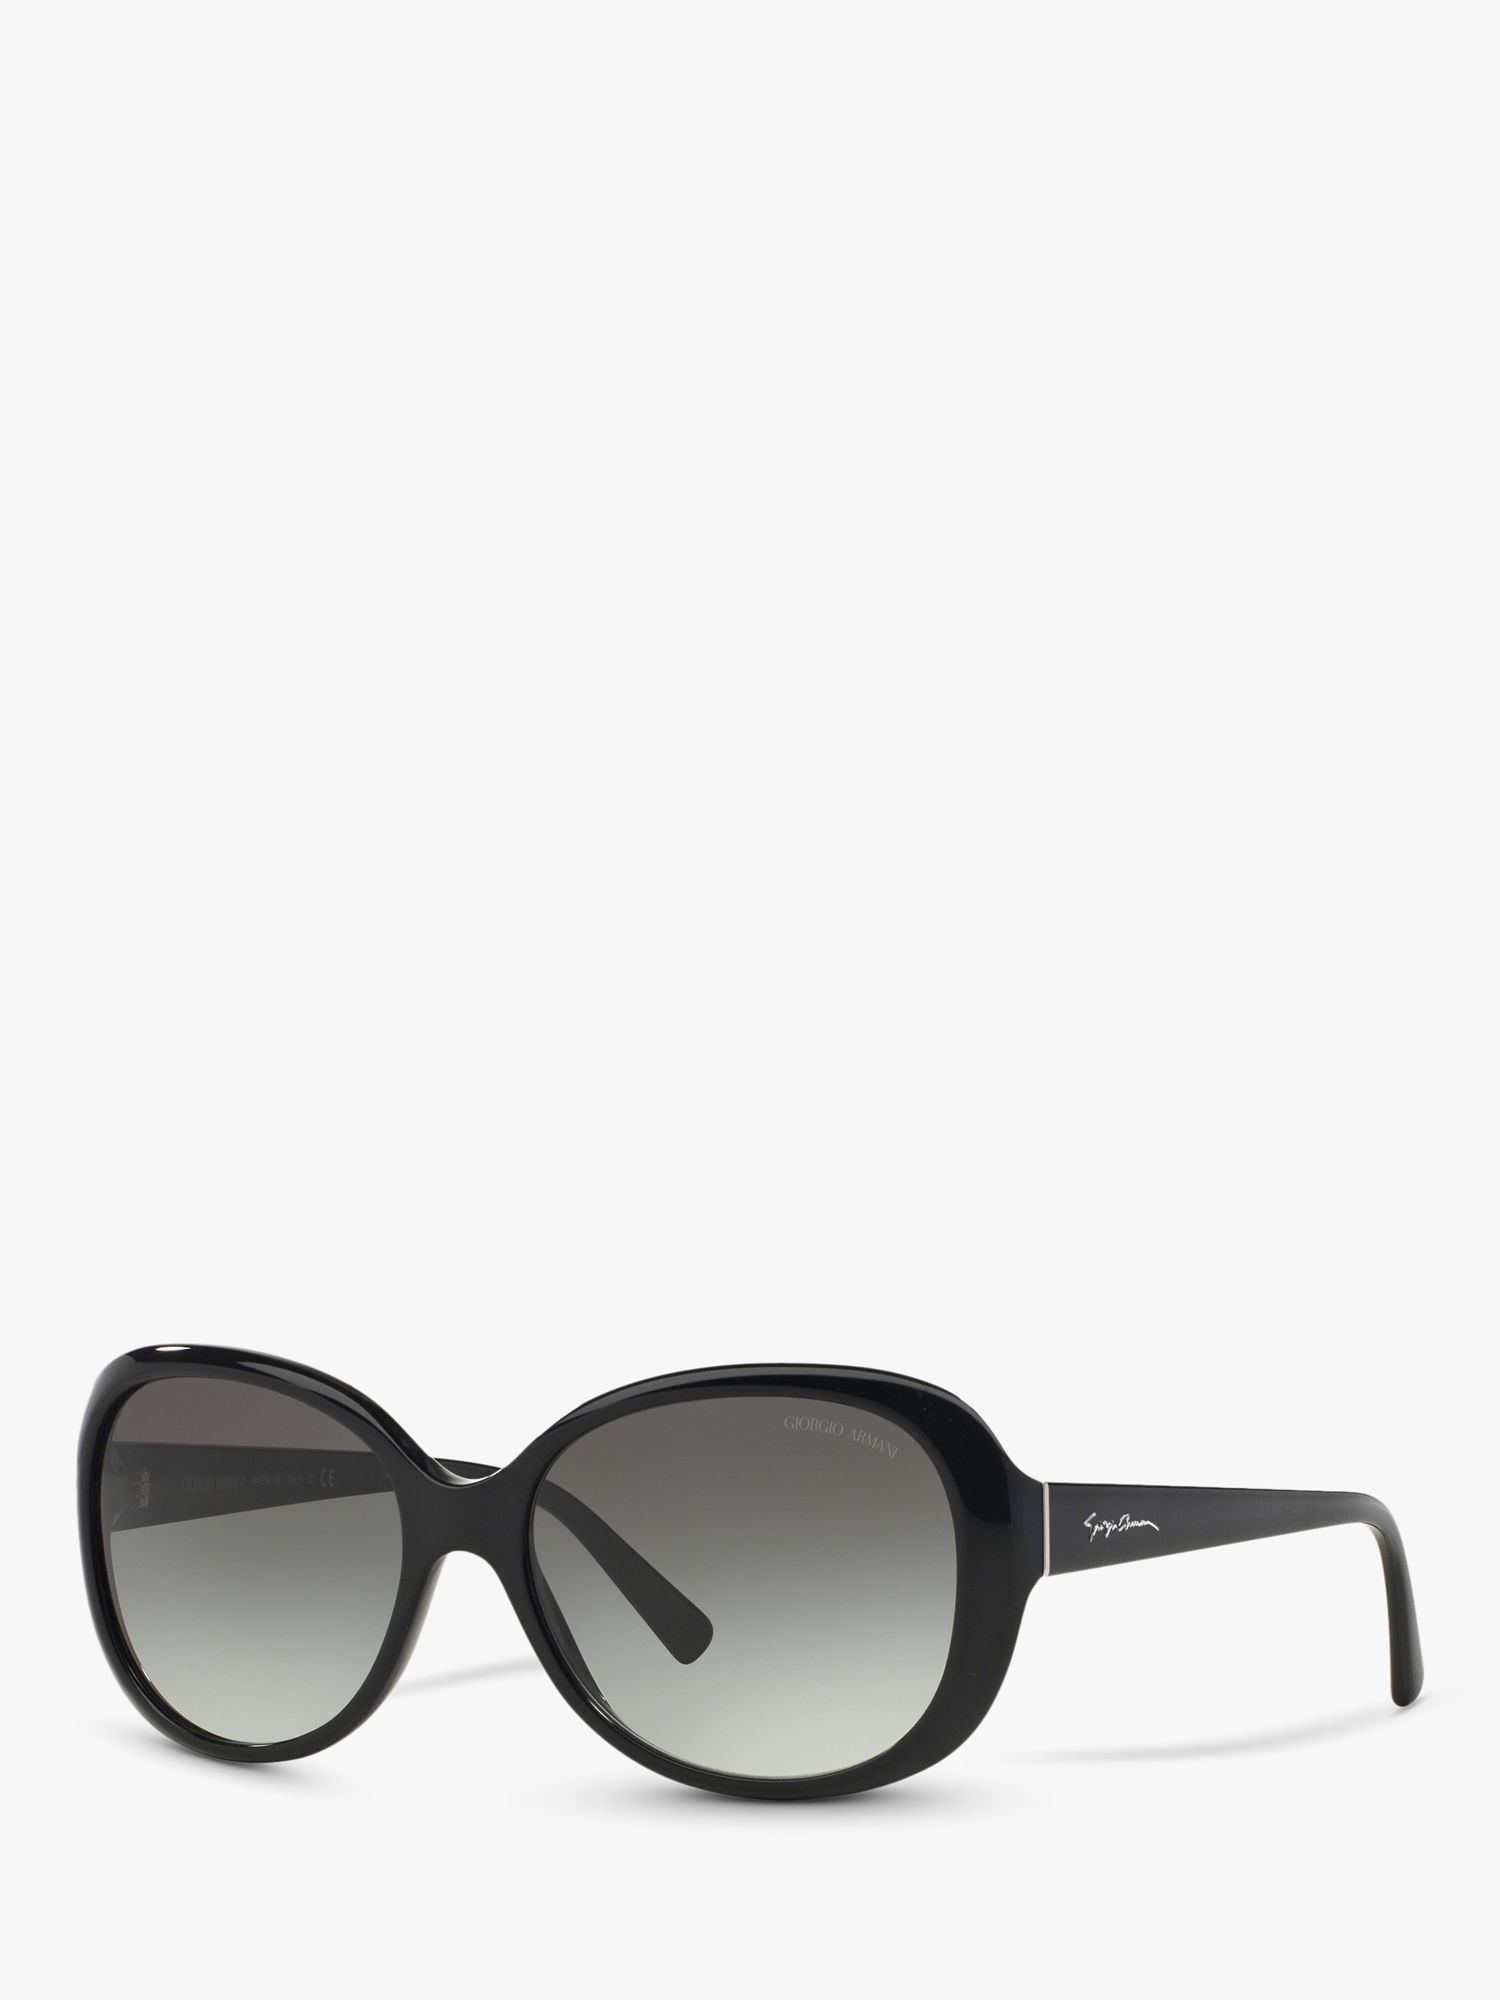 Giorgio Armani AR8047 Women's Round Sunglasses, Polished Black/Grey  Gradient at John Lewis & Partners